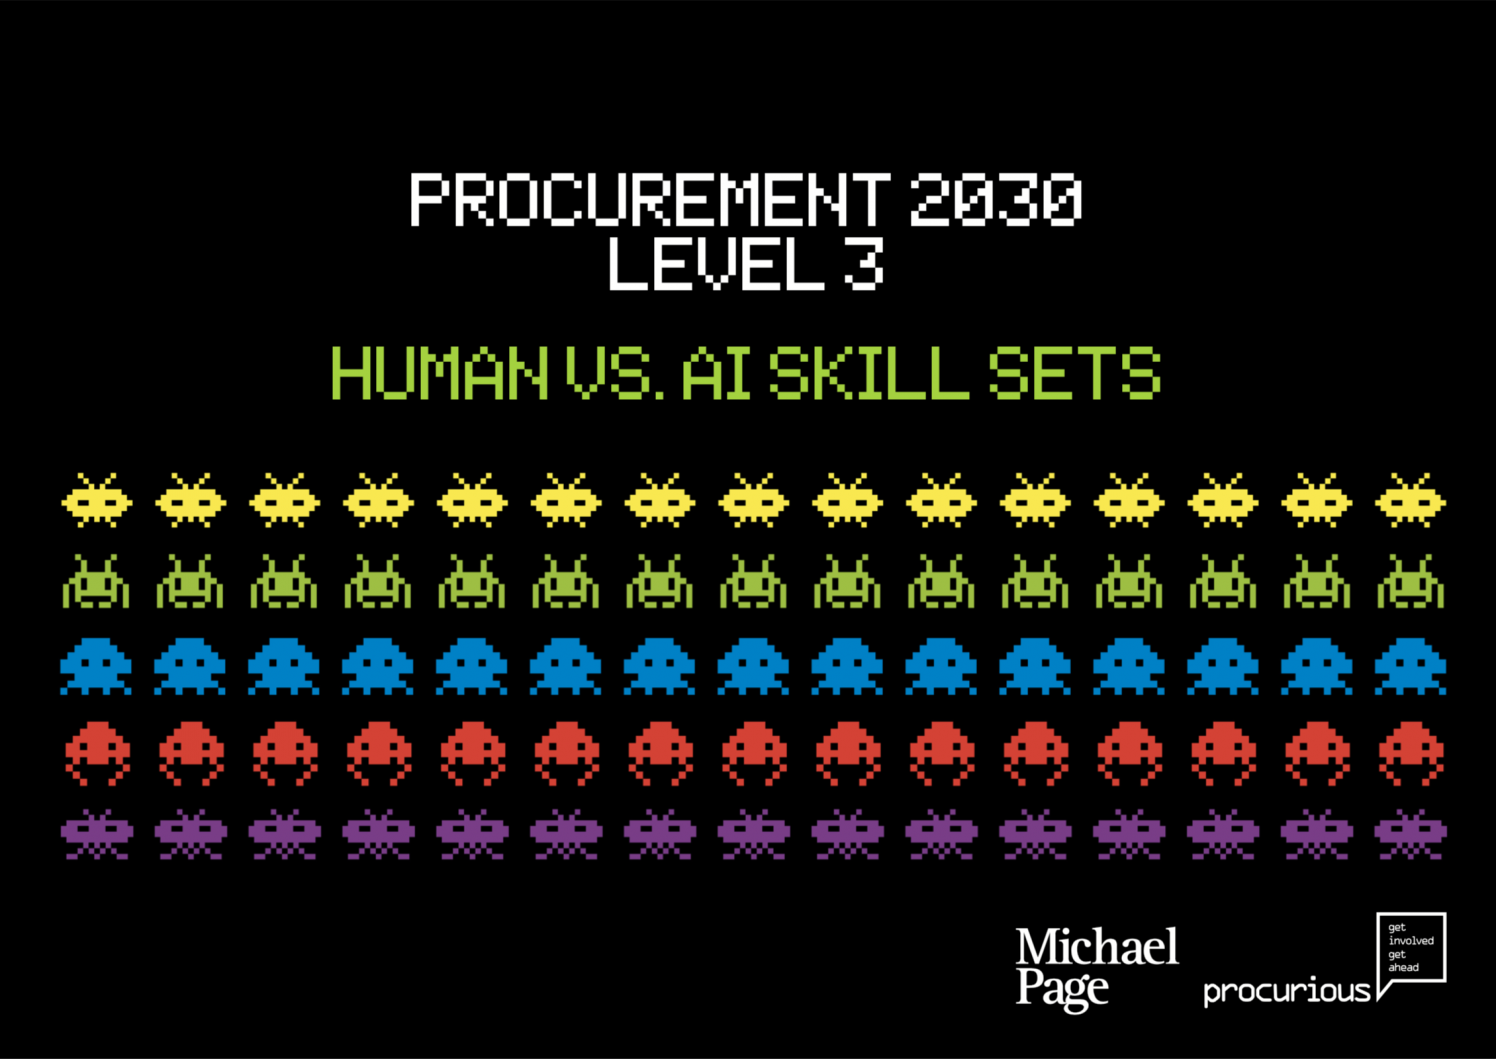 Resource Procurement 2030 cover photo